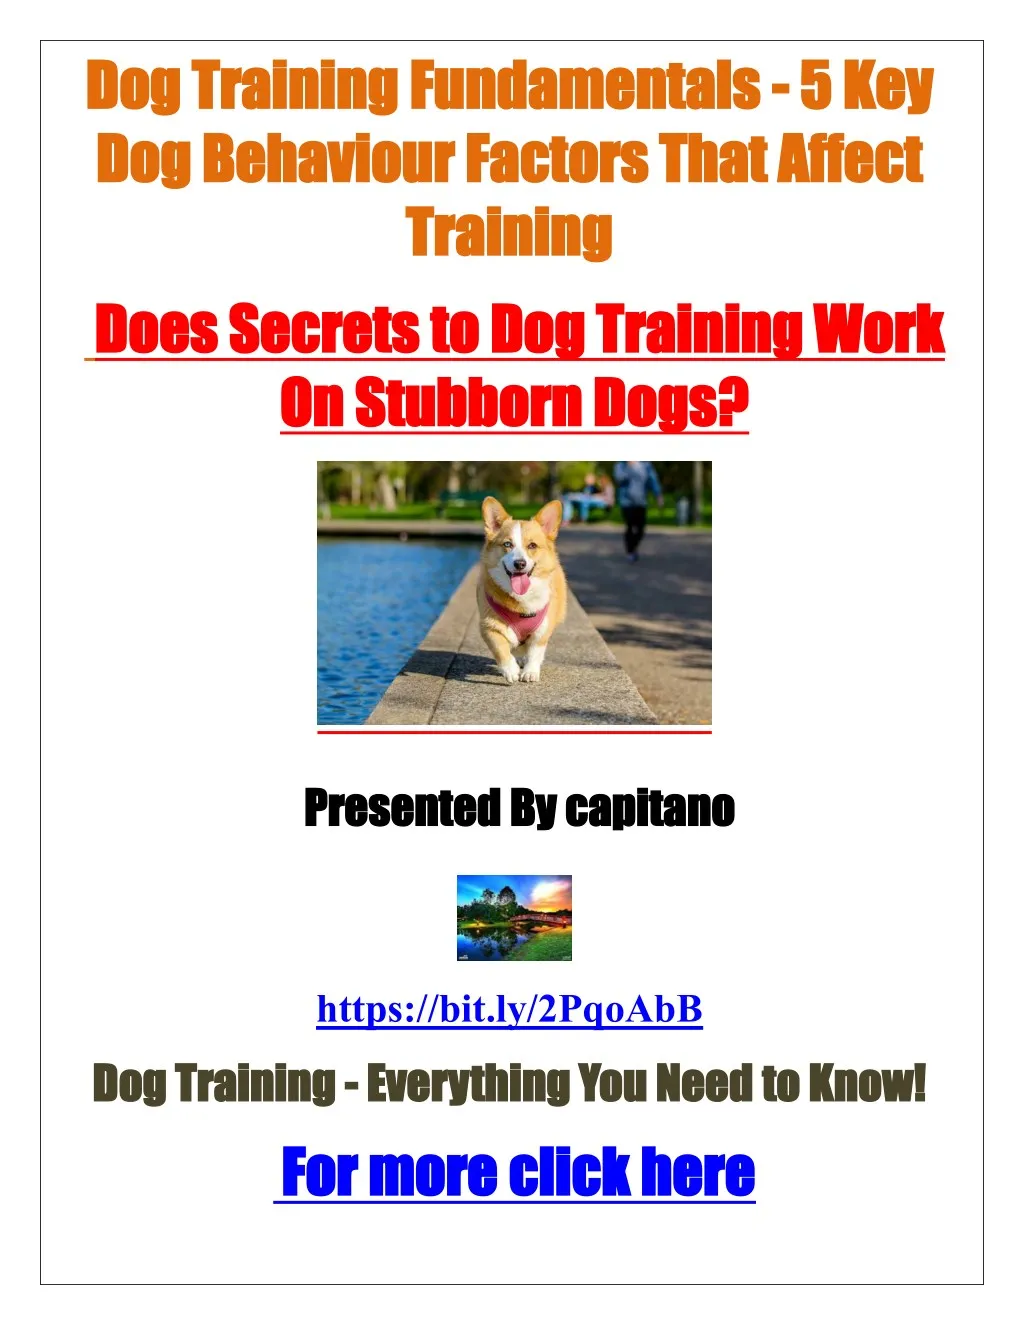 dog training fundamentals dog training